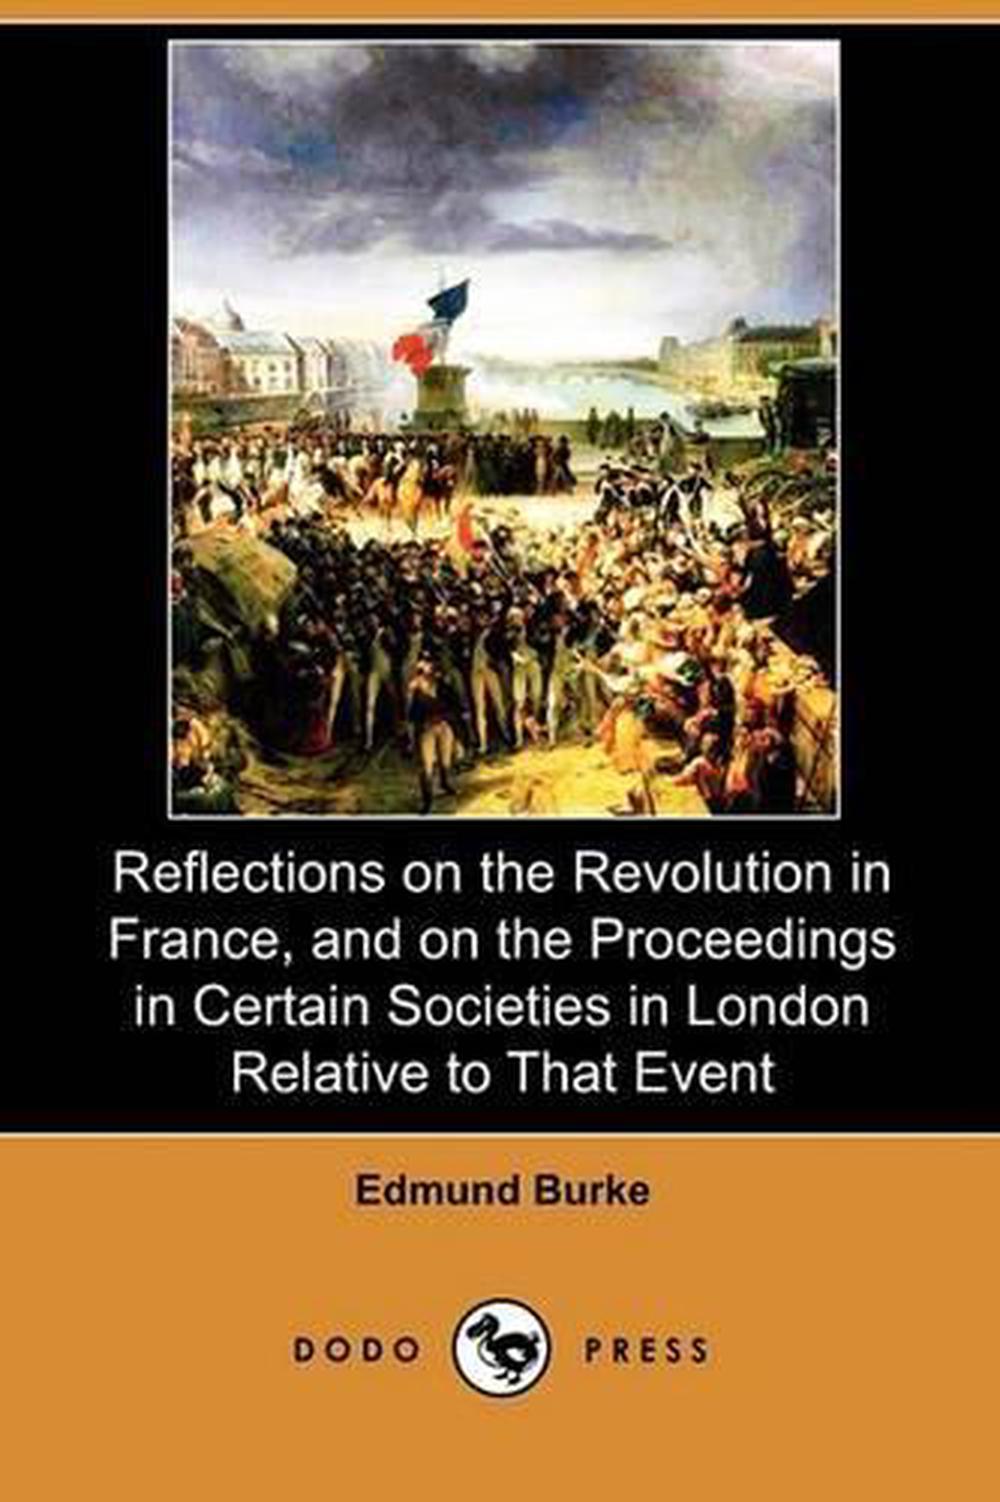 edmund burke reflections on the revolution in france 1790